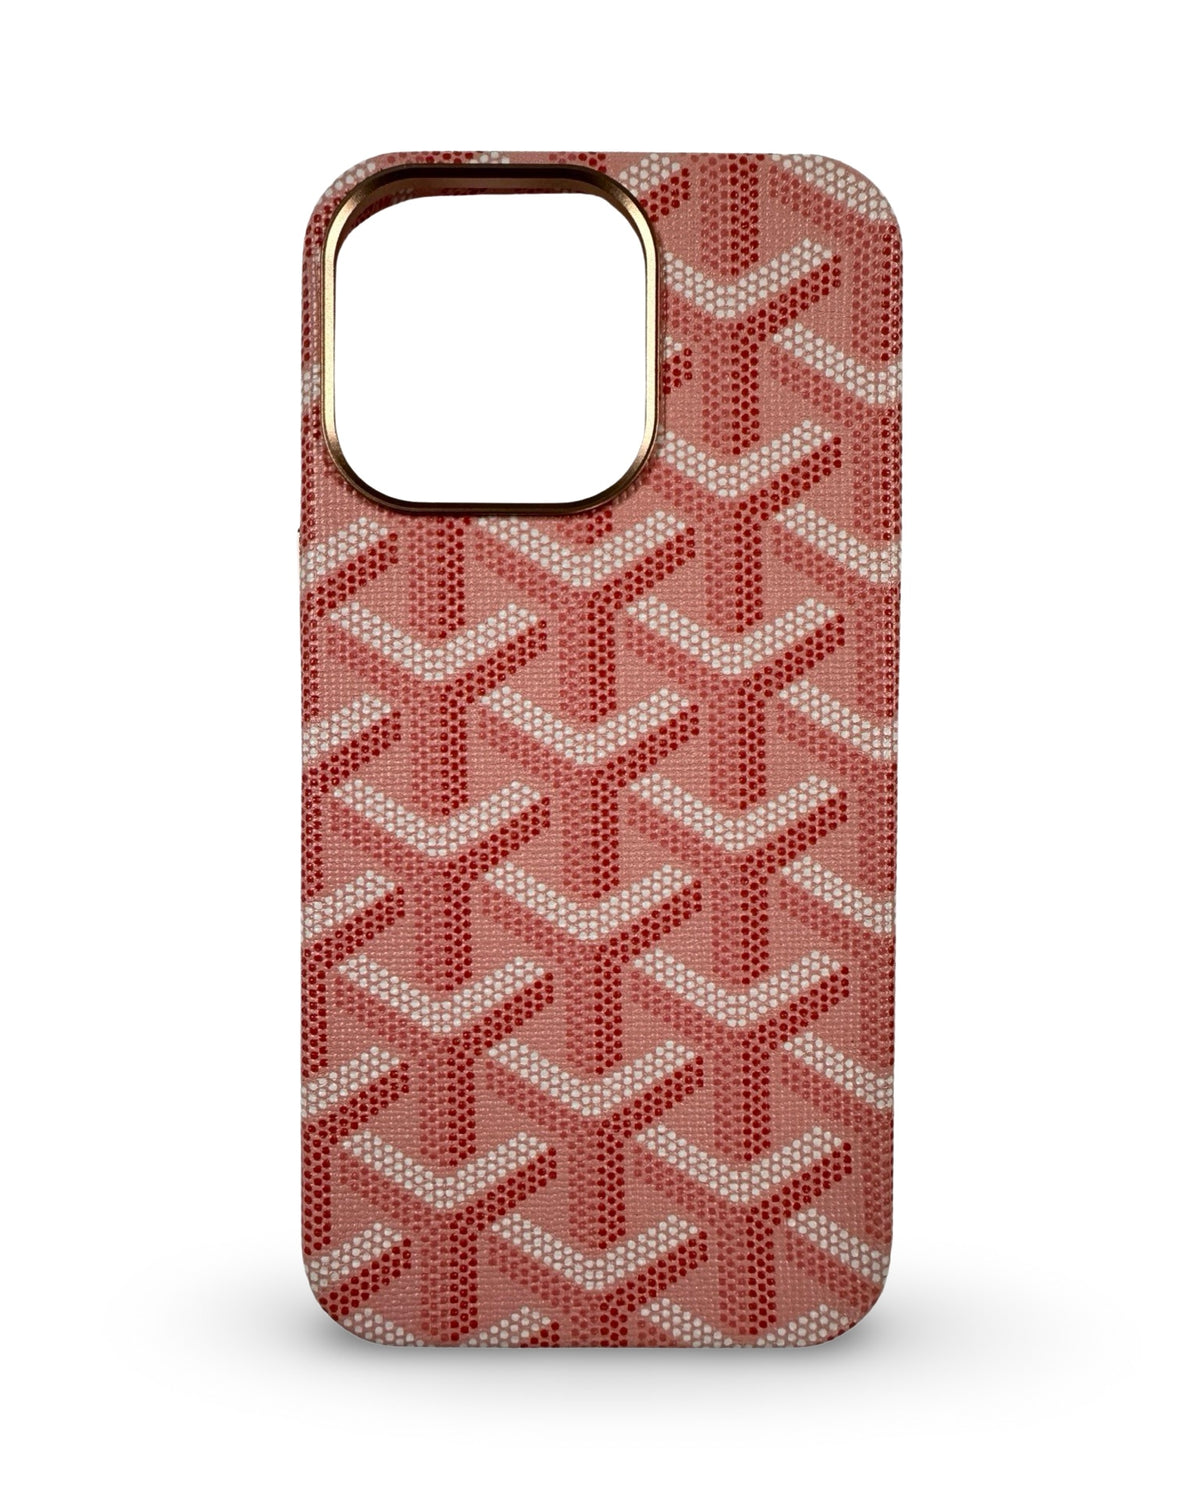 CaseNerd "Go Coral Pink Magsafe" iPhone Case